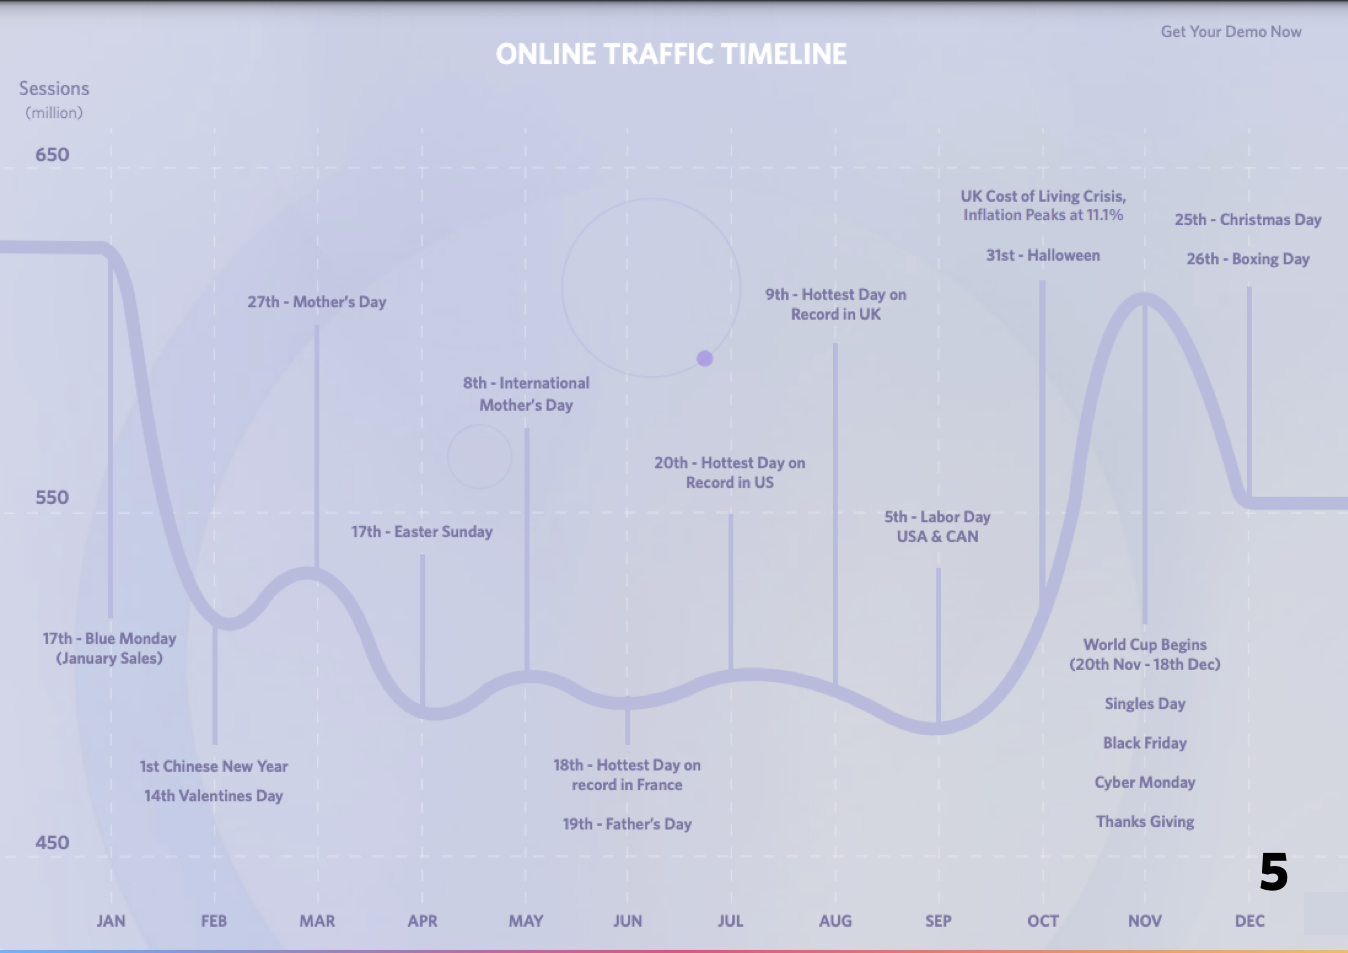 SaleCycle-Webinar-Online-Traffic-Timeline